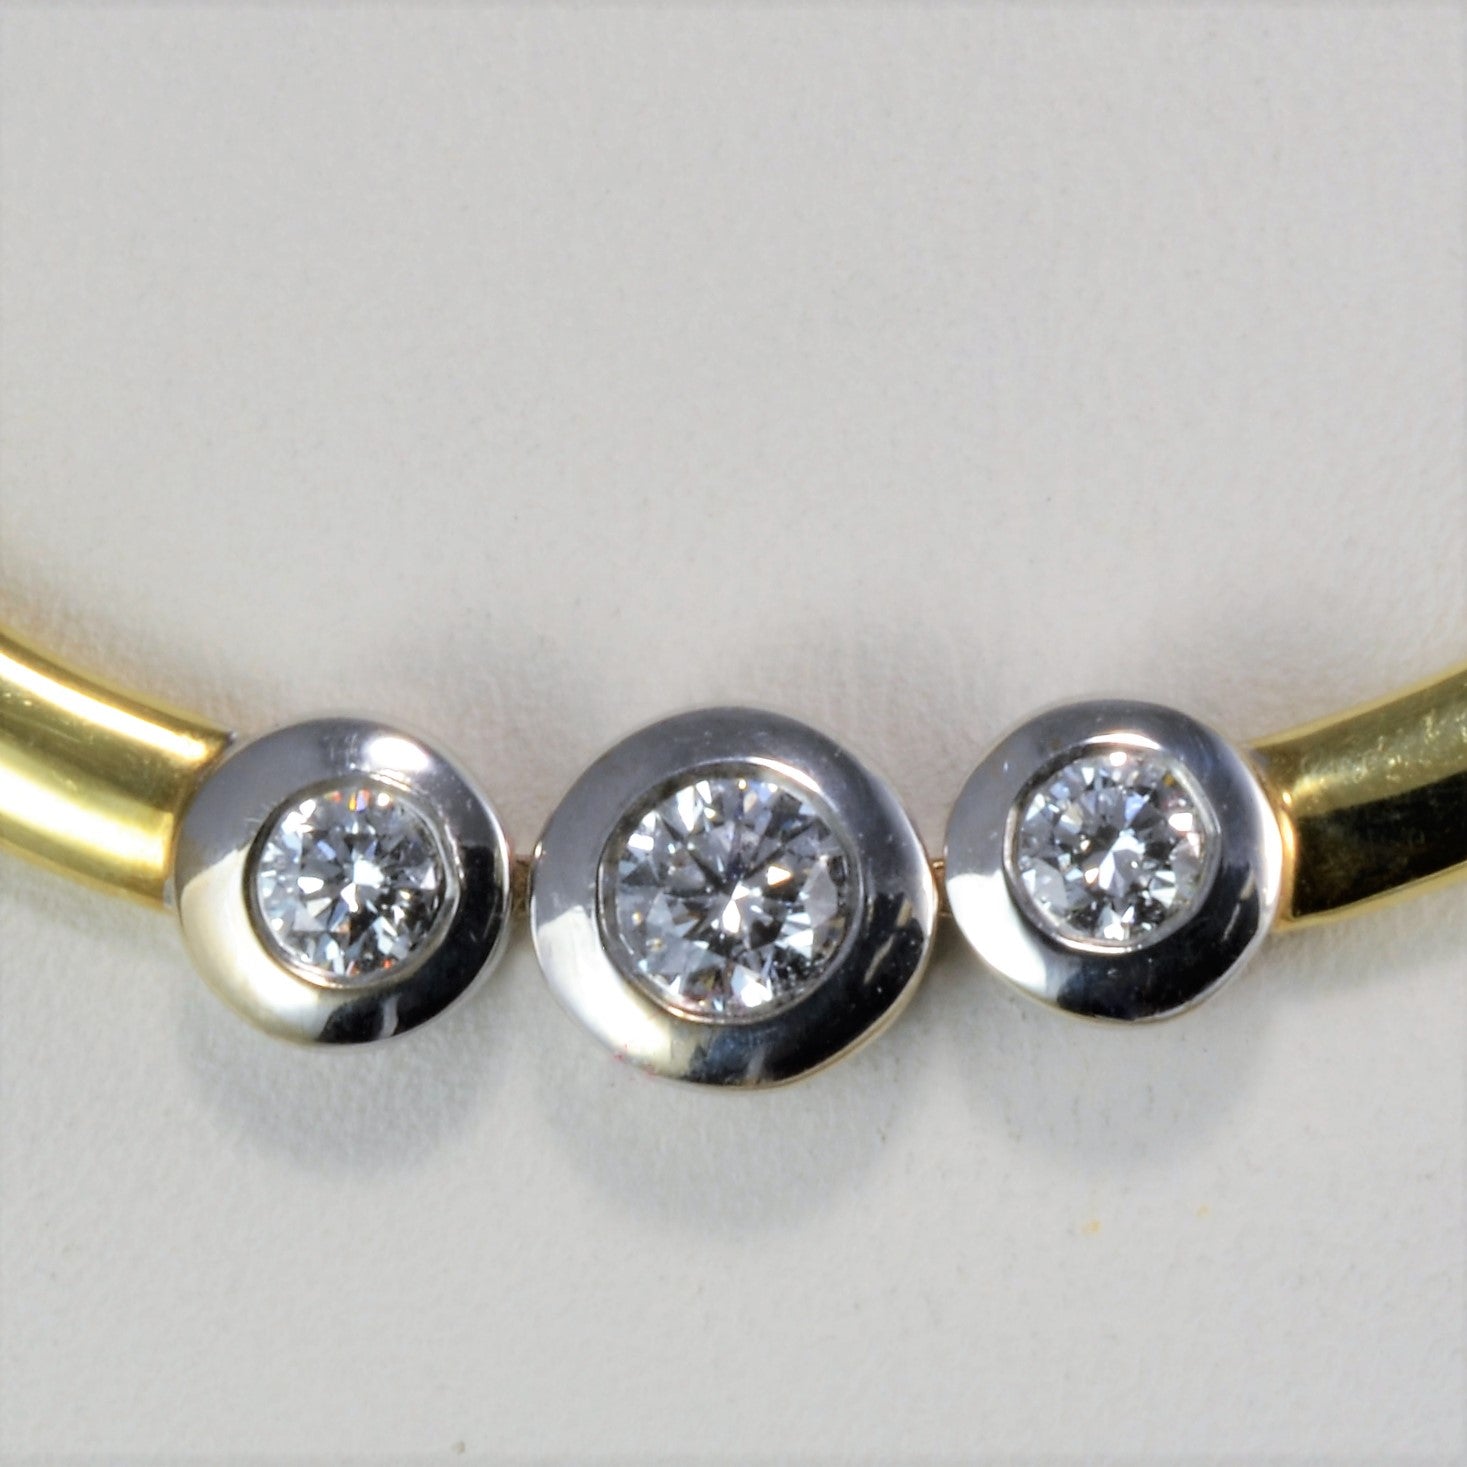 Two Tone Gold Bezel Set Diamond Necklace | 0.60 ctw, 18''|